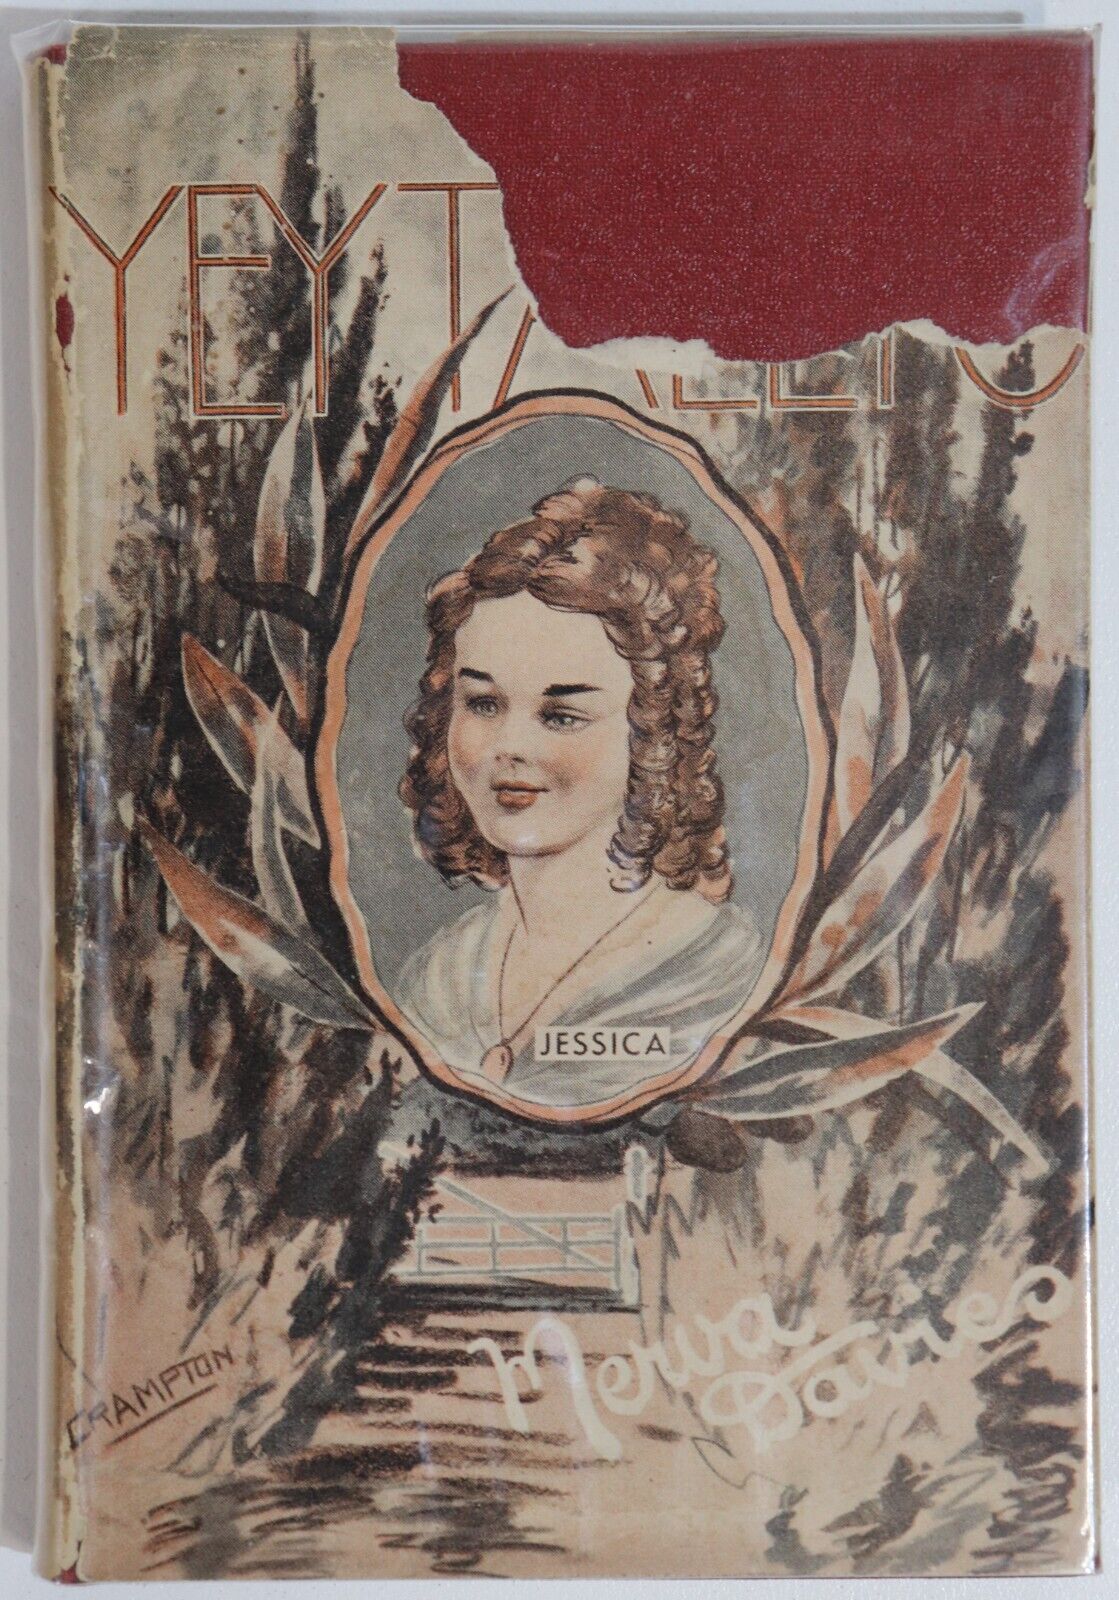 Yeytallic by Merva Davies - 1945 - Antique Australian Fiction Book